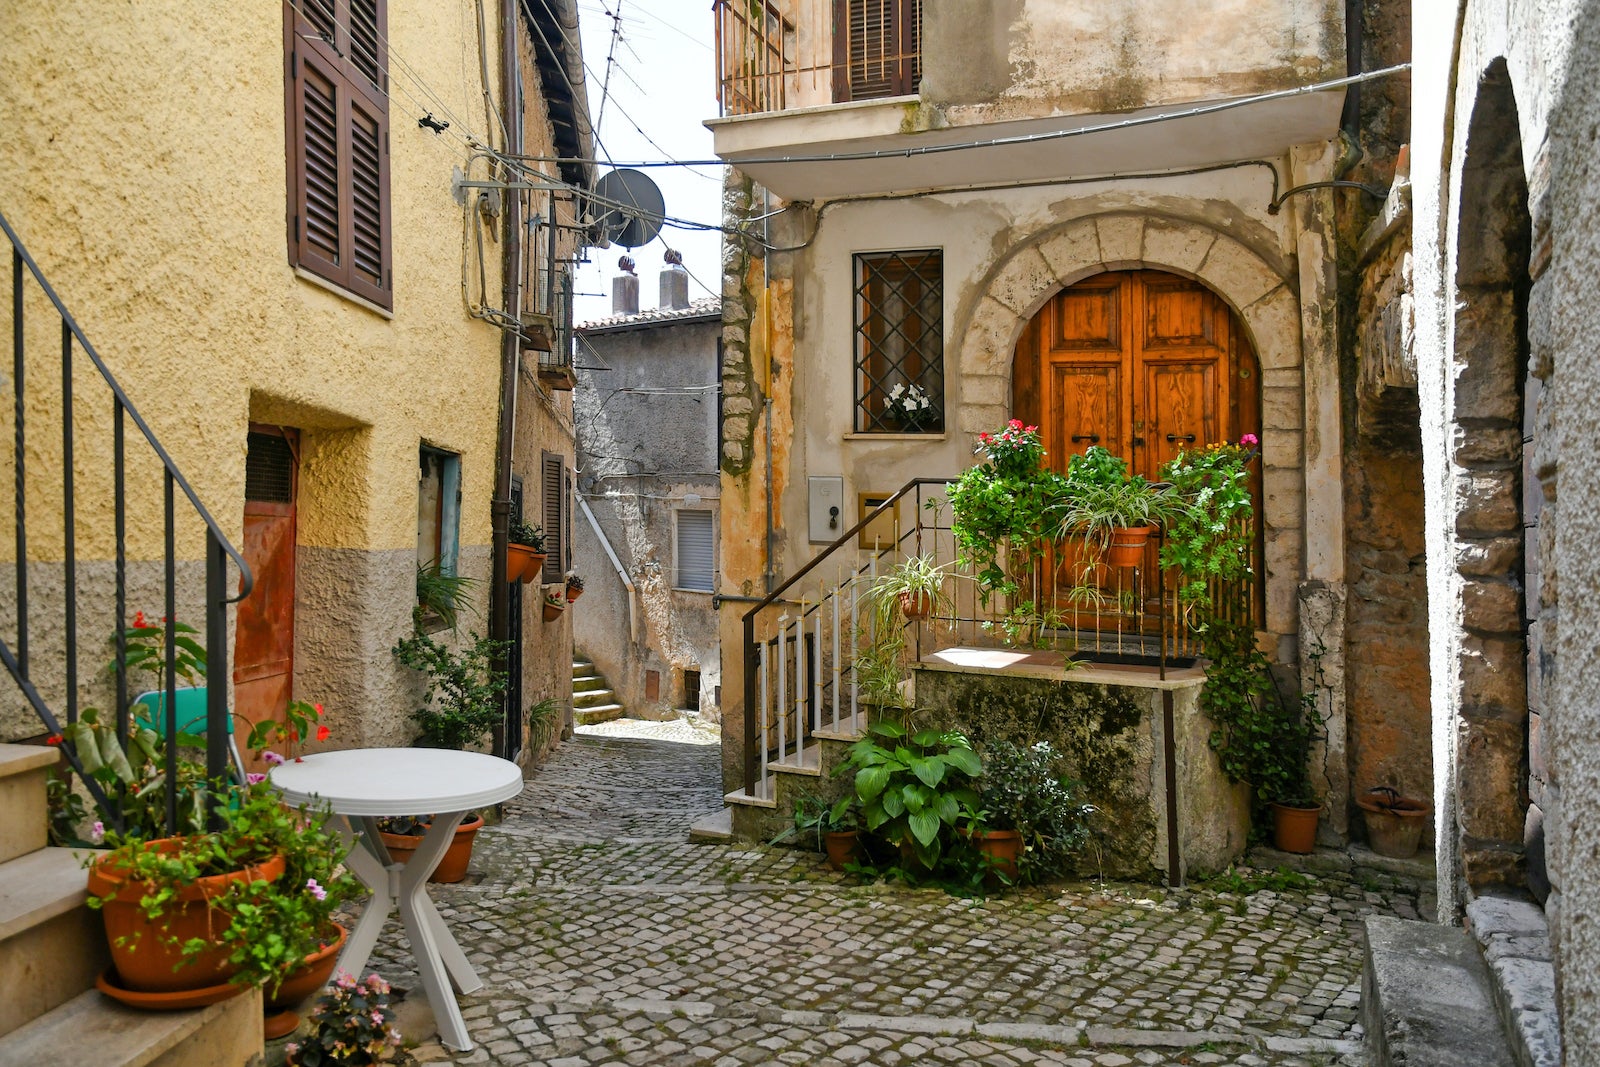 The old town of Maenza in Lazio region.